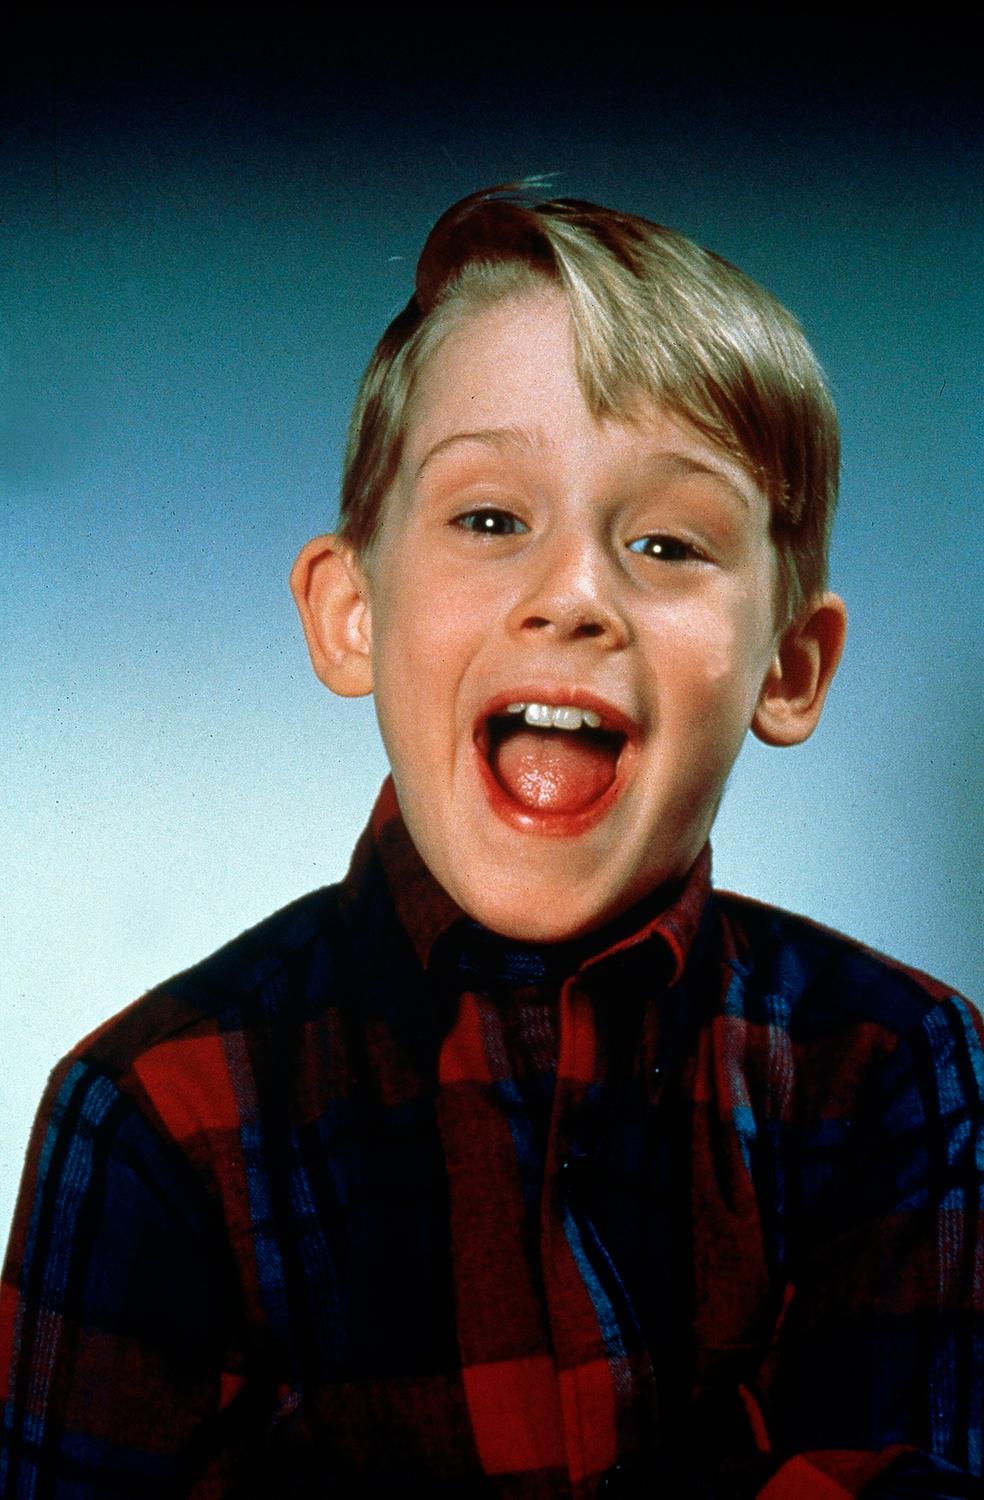 Macaulay Culkin slog igenom som som 10-åring i succékomedin ”Ensam hemma”.